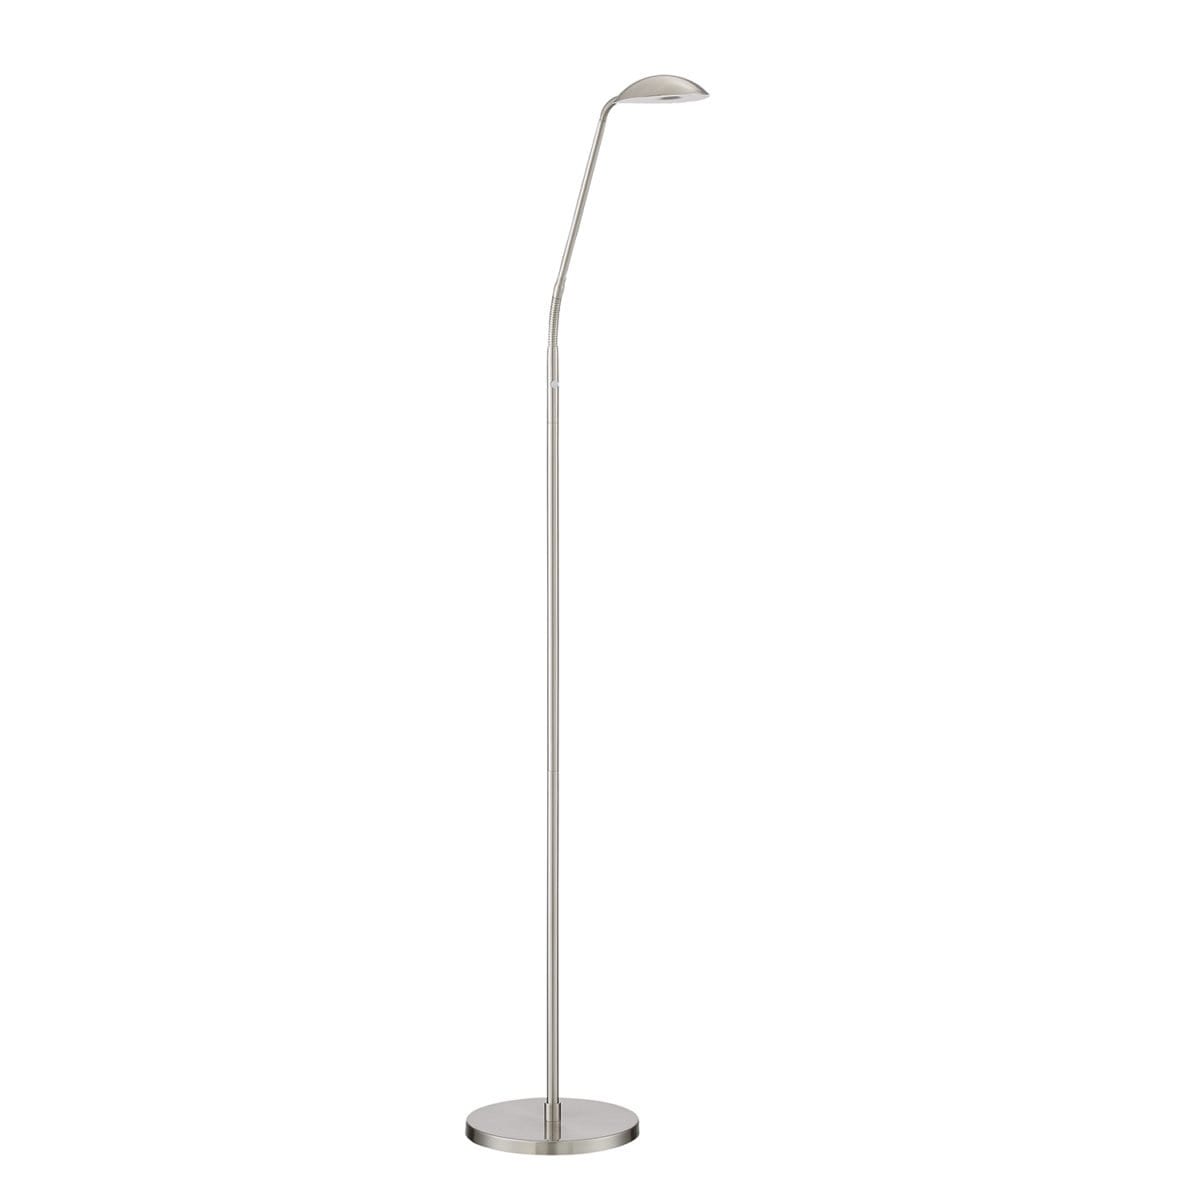 148 FL4095 SN
LED Floor Lamp
Regular Price $149.99
Sale Price $104.99